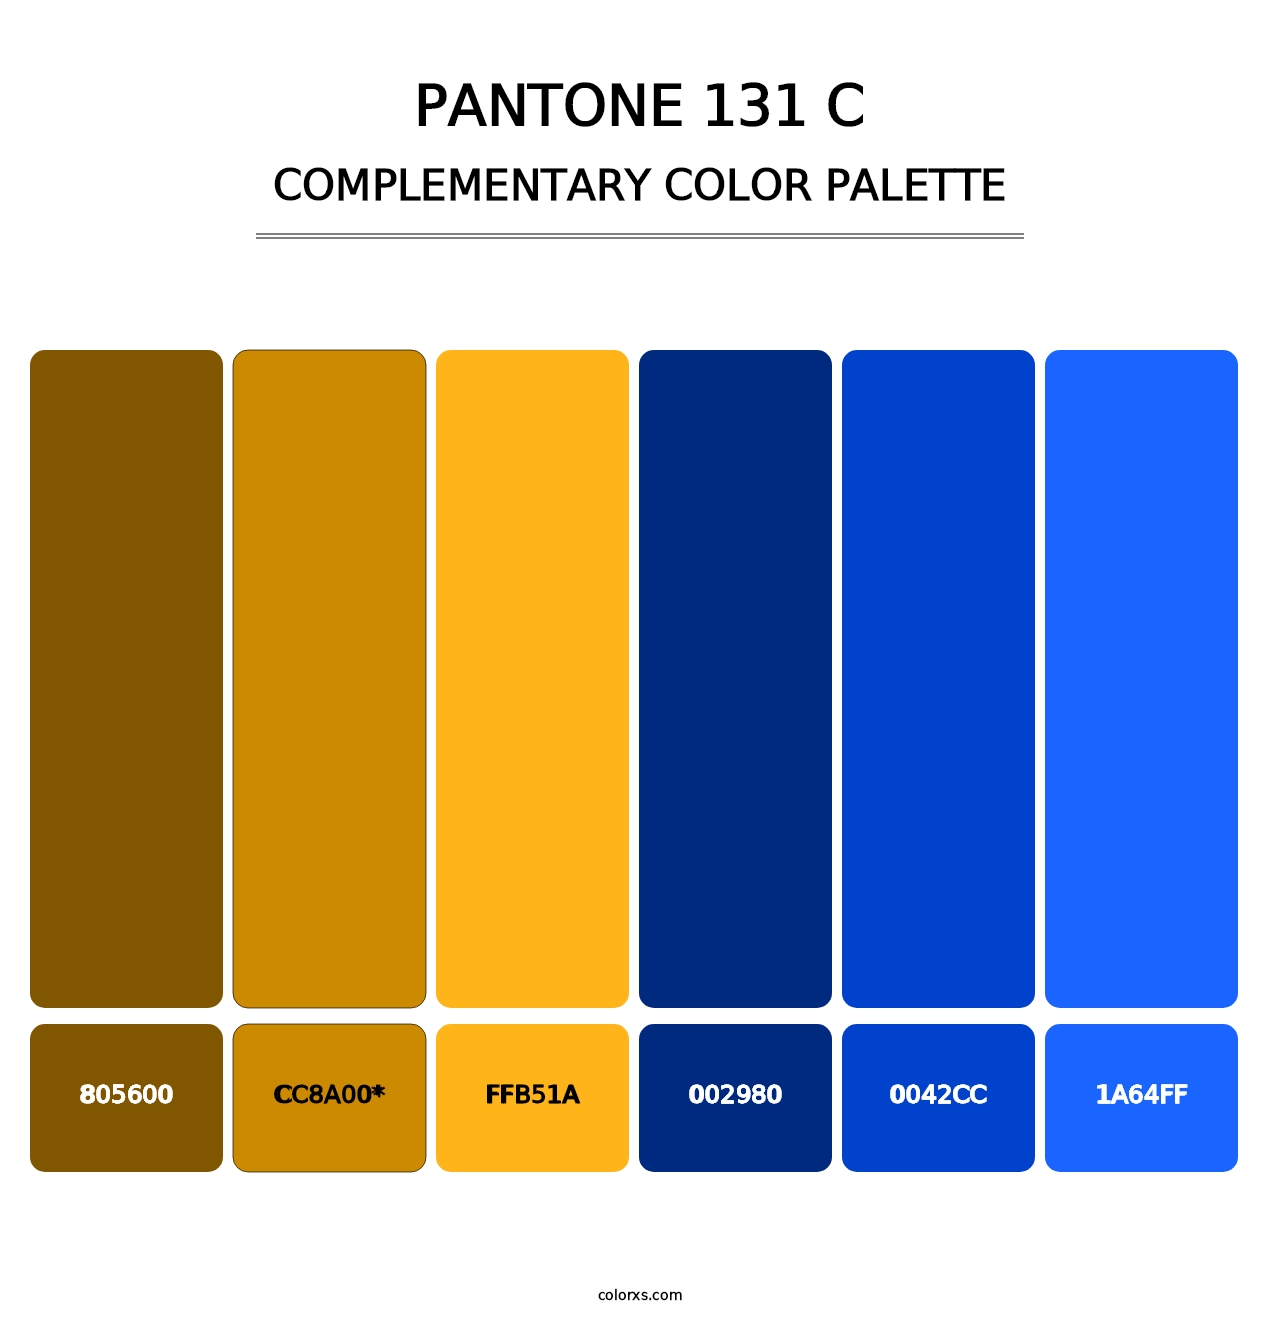 PANTONE 131 C - Complementary Color Palette